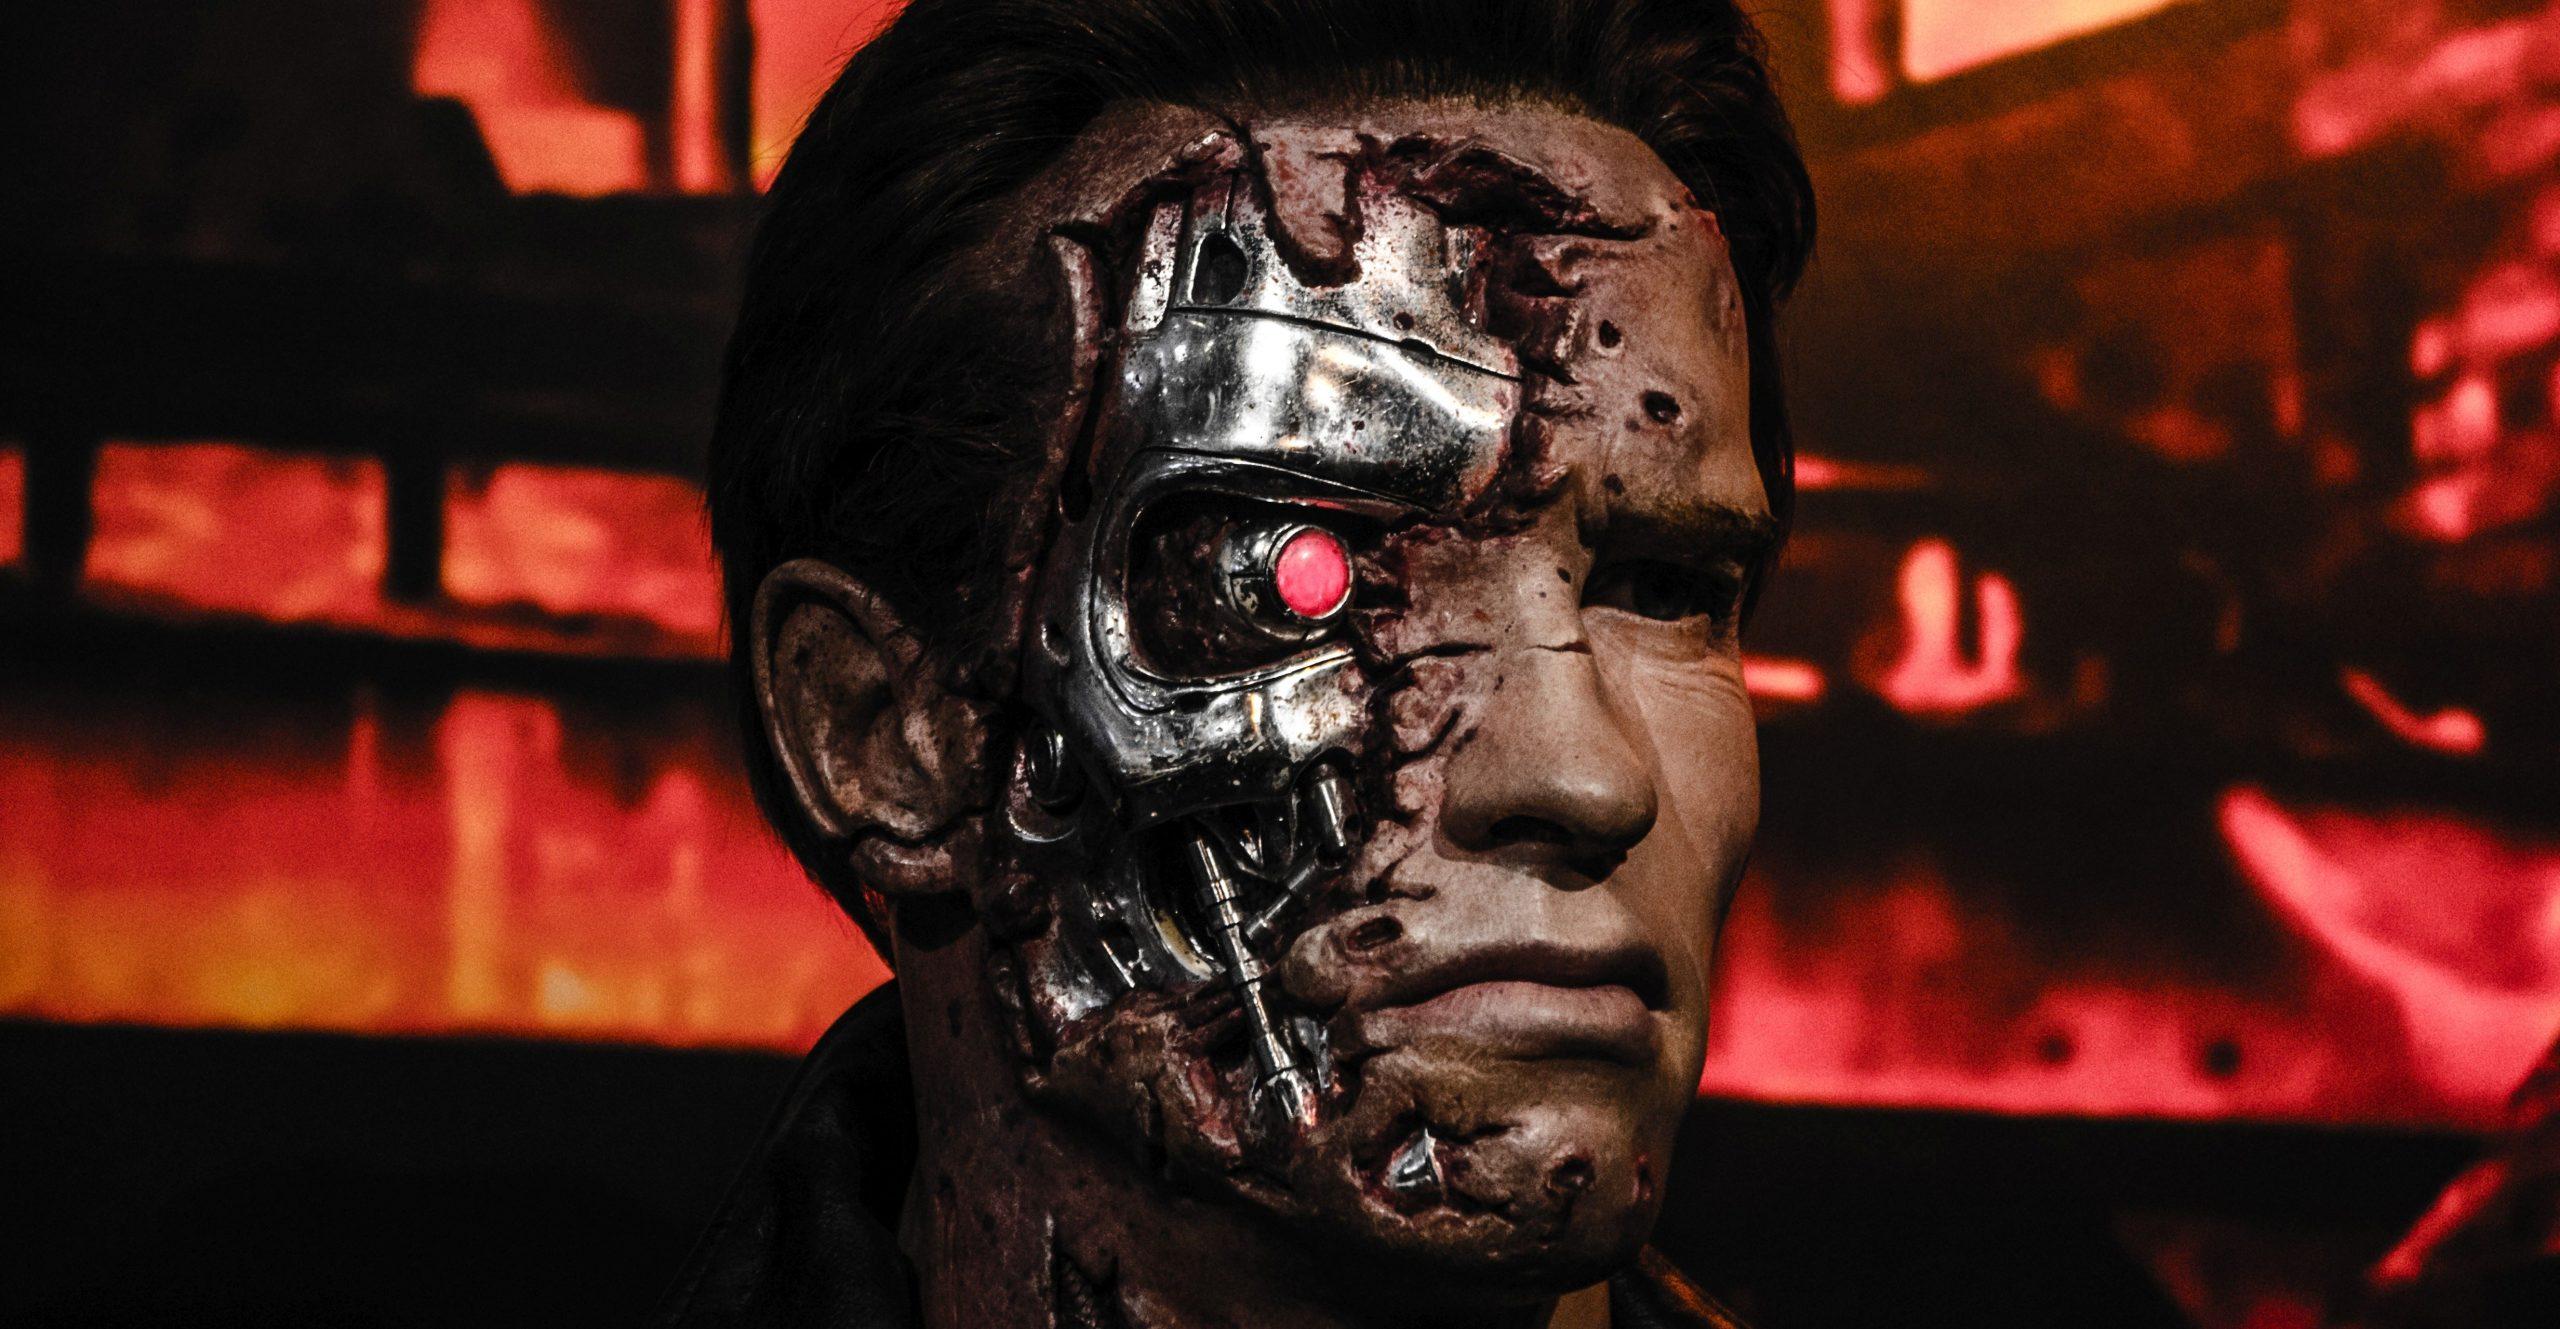 The Terminator in Madame Tussaud in London.